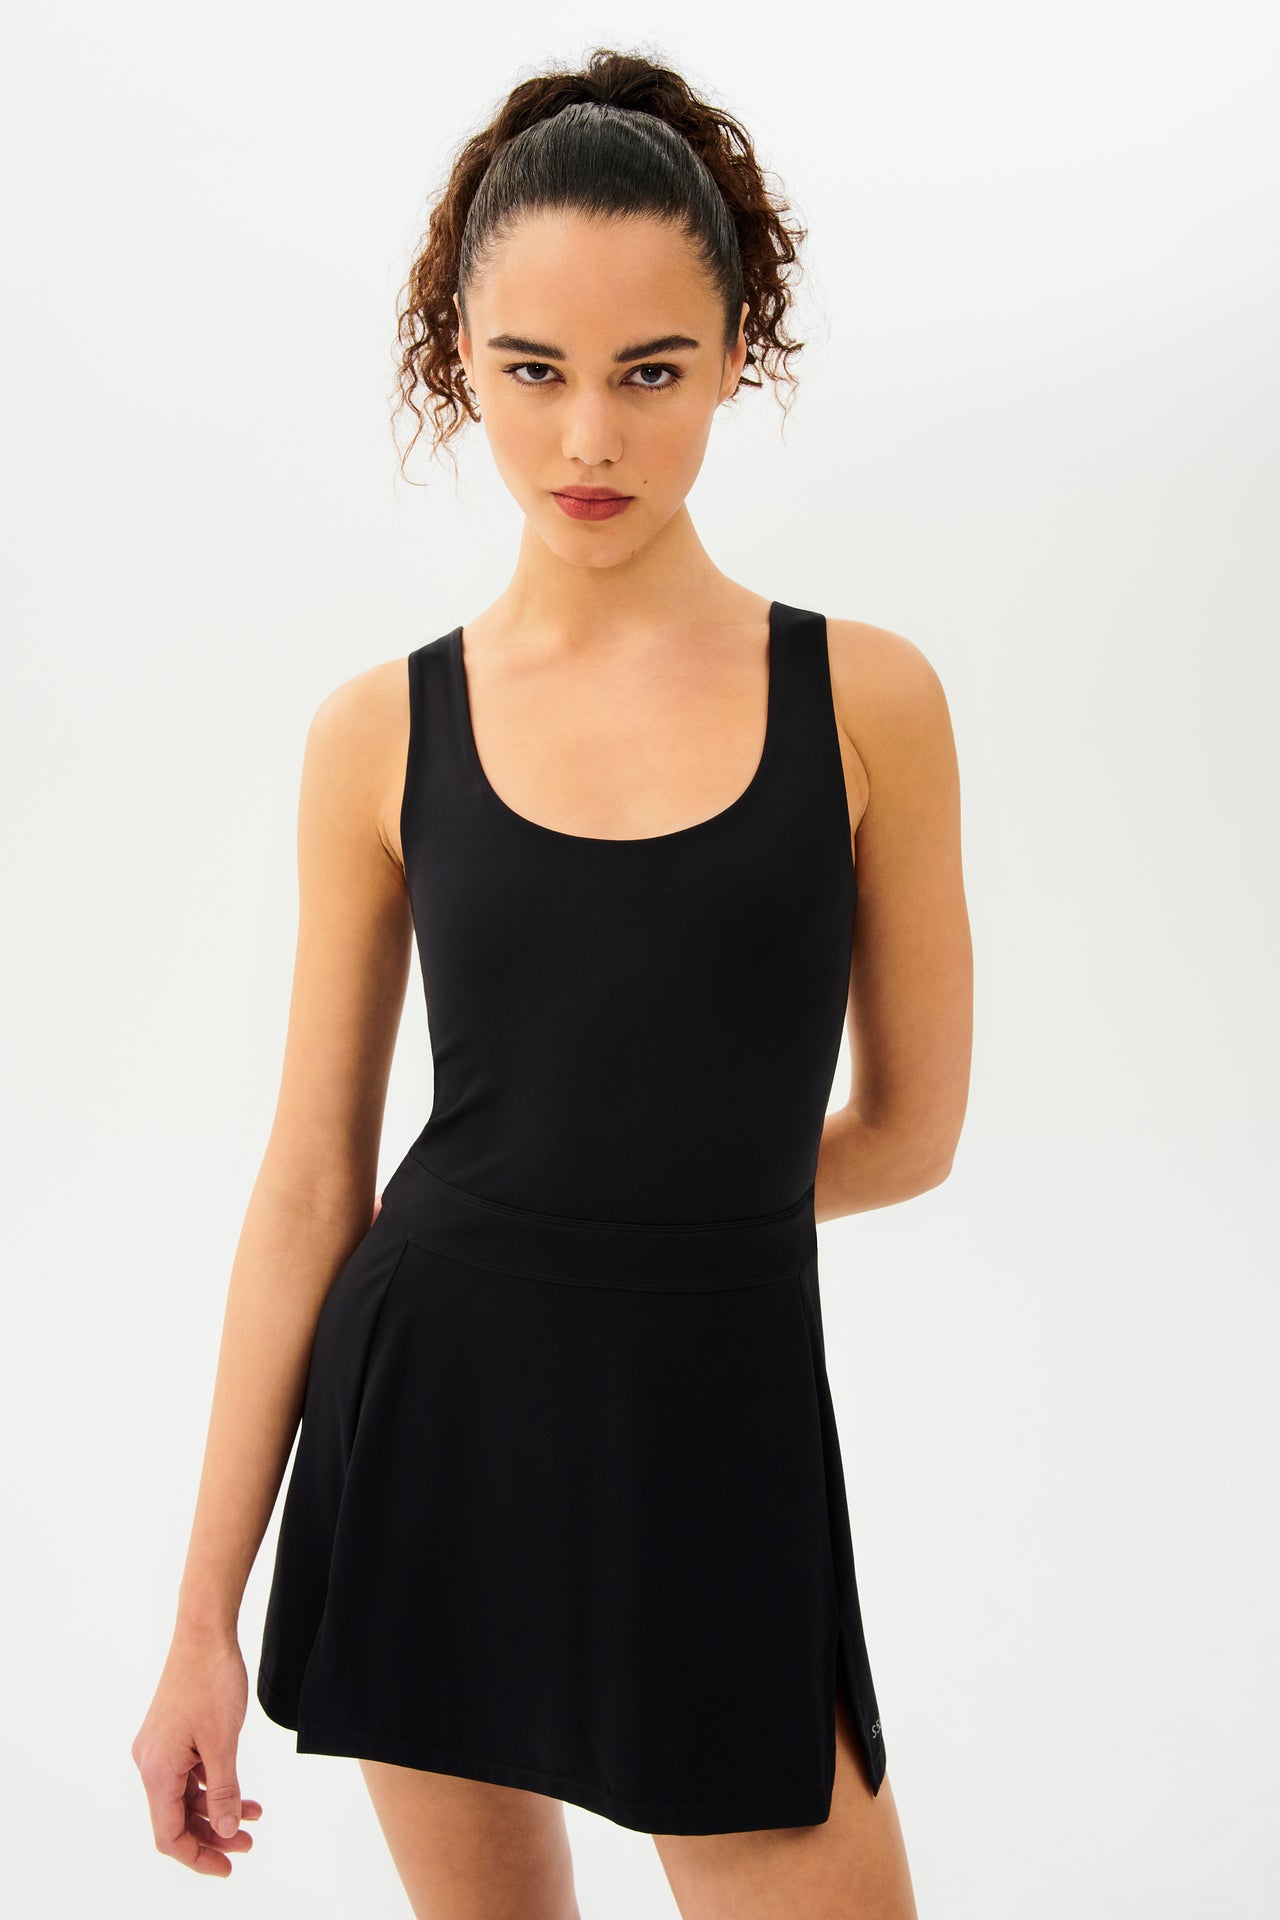 A woman is posing in a Splits59 Martina Rigor Dress - Black.